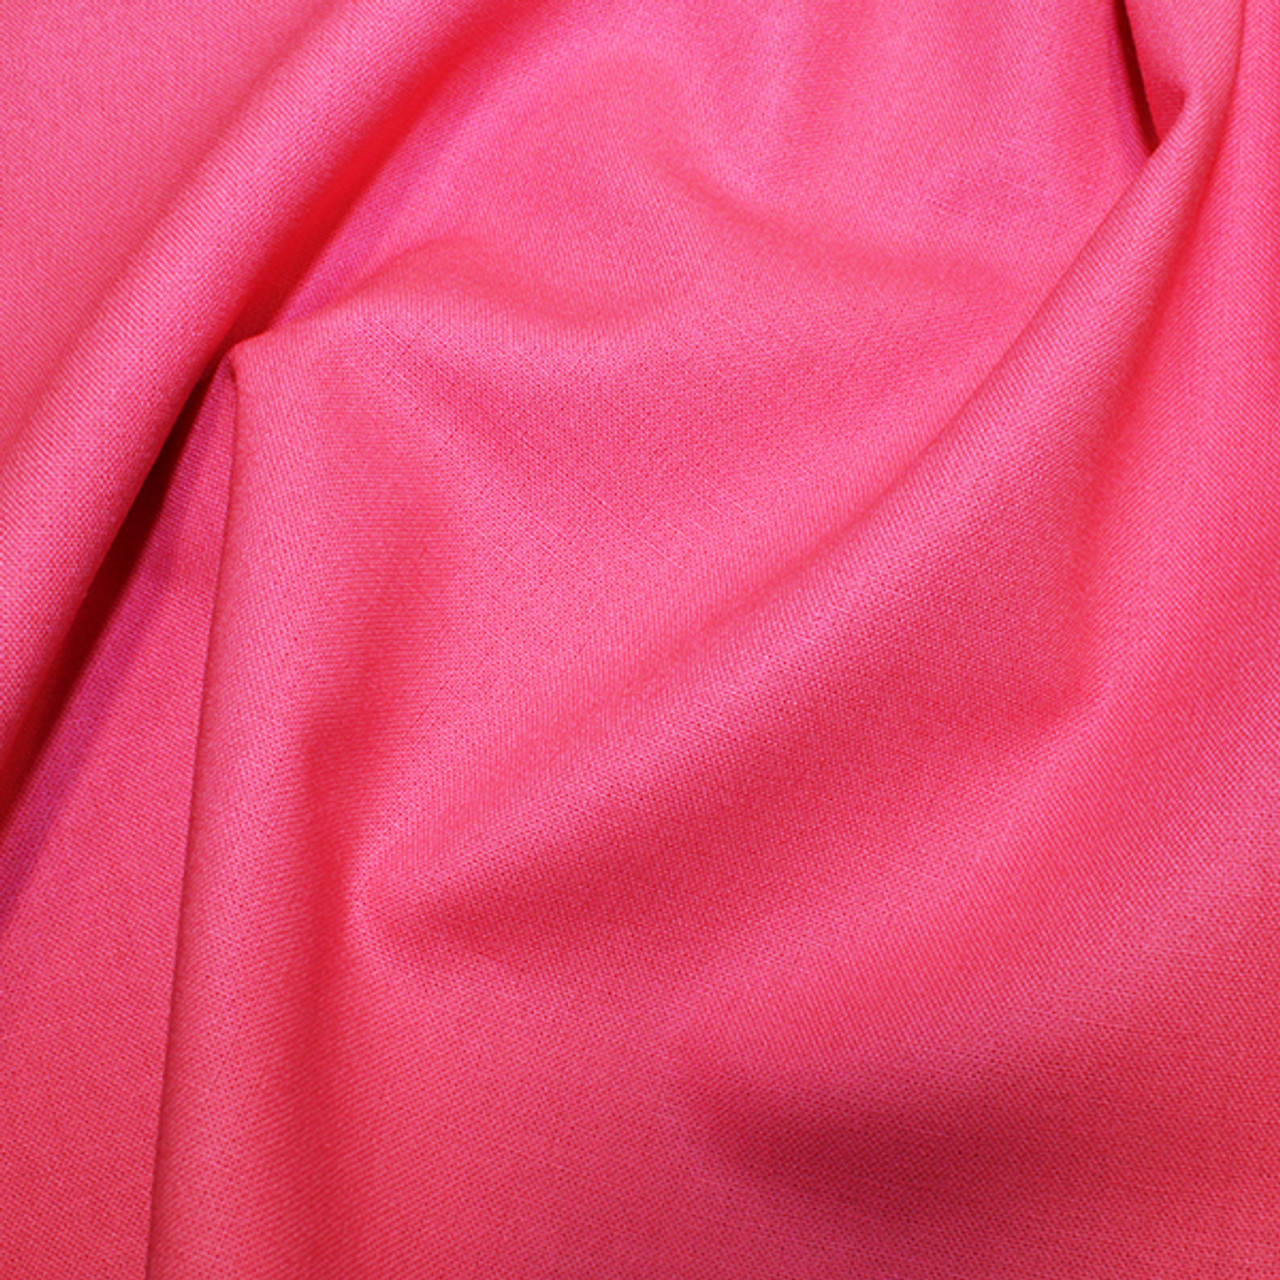 Azalea pink 100% Cotton Fabric, 112cm/44in wide, Sold Per HALF Metre